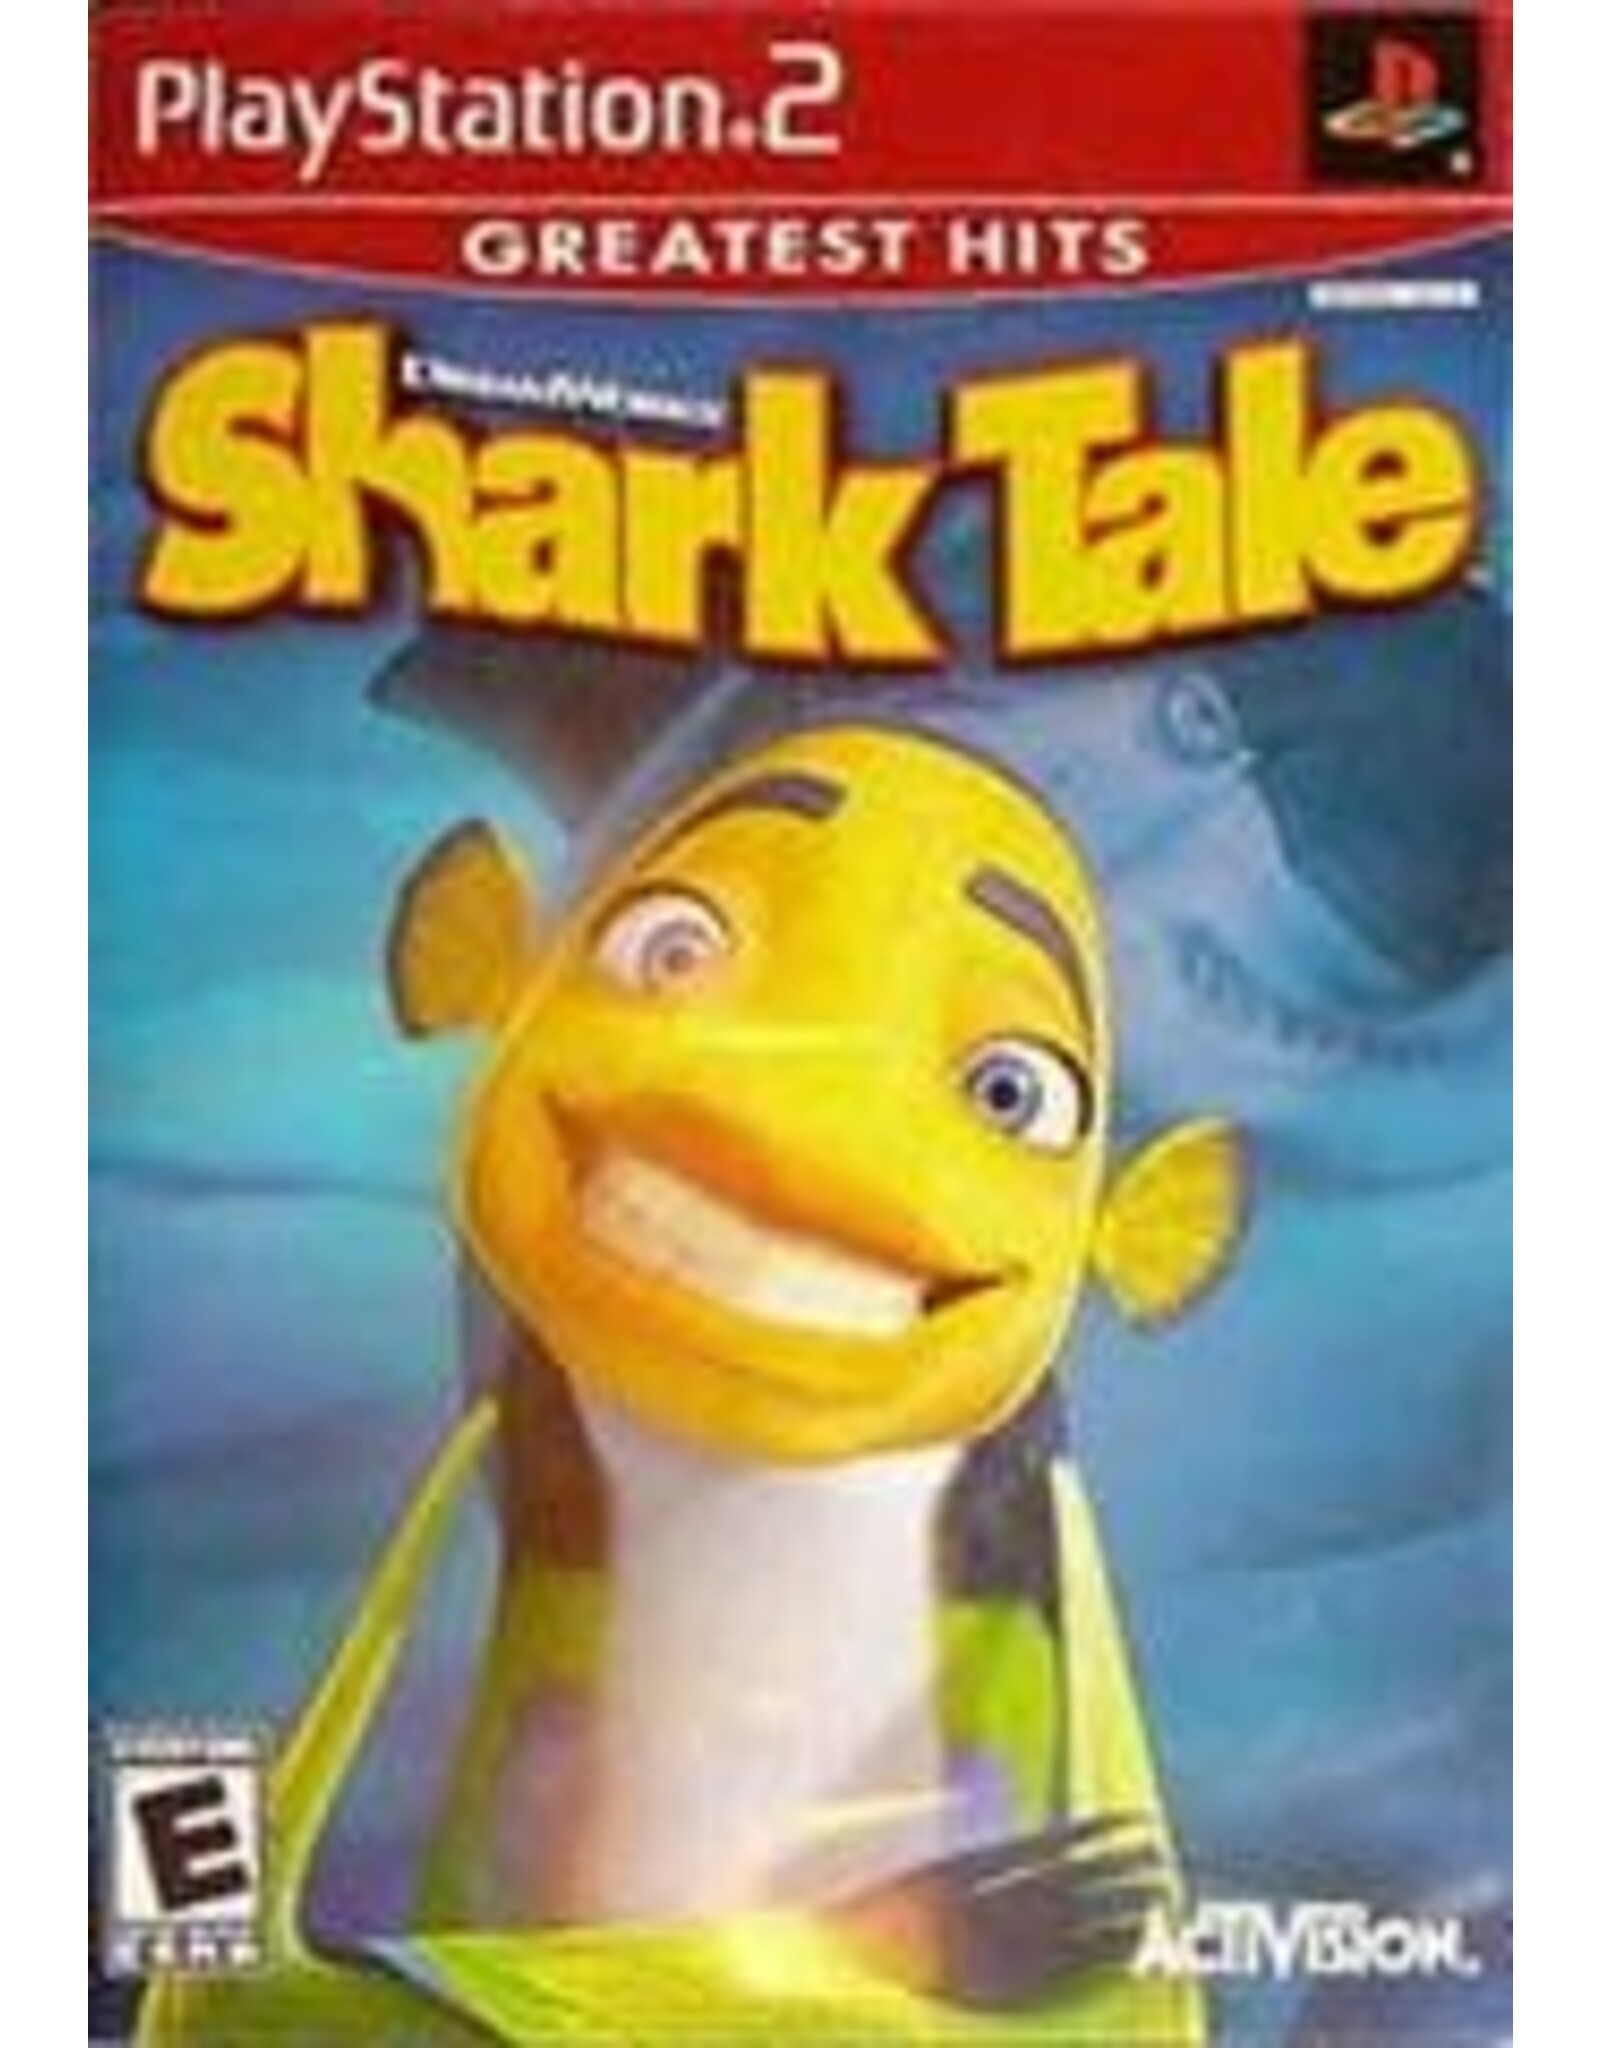 Playstation 2 Shark Tale - Greatest Hits (CiB, Damaged Sleeve)